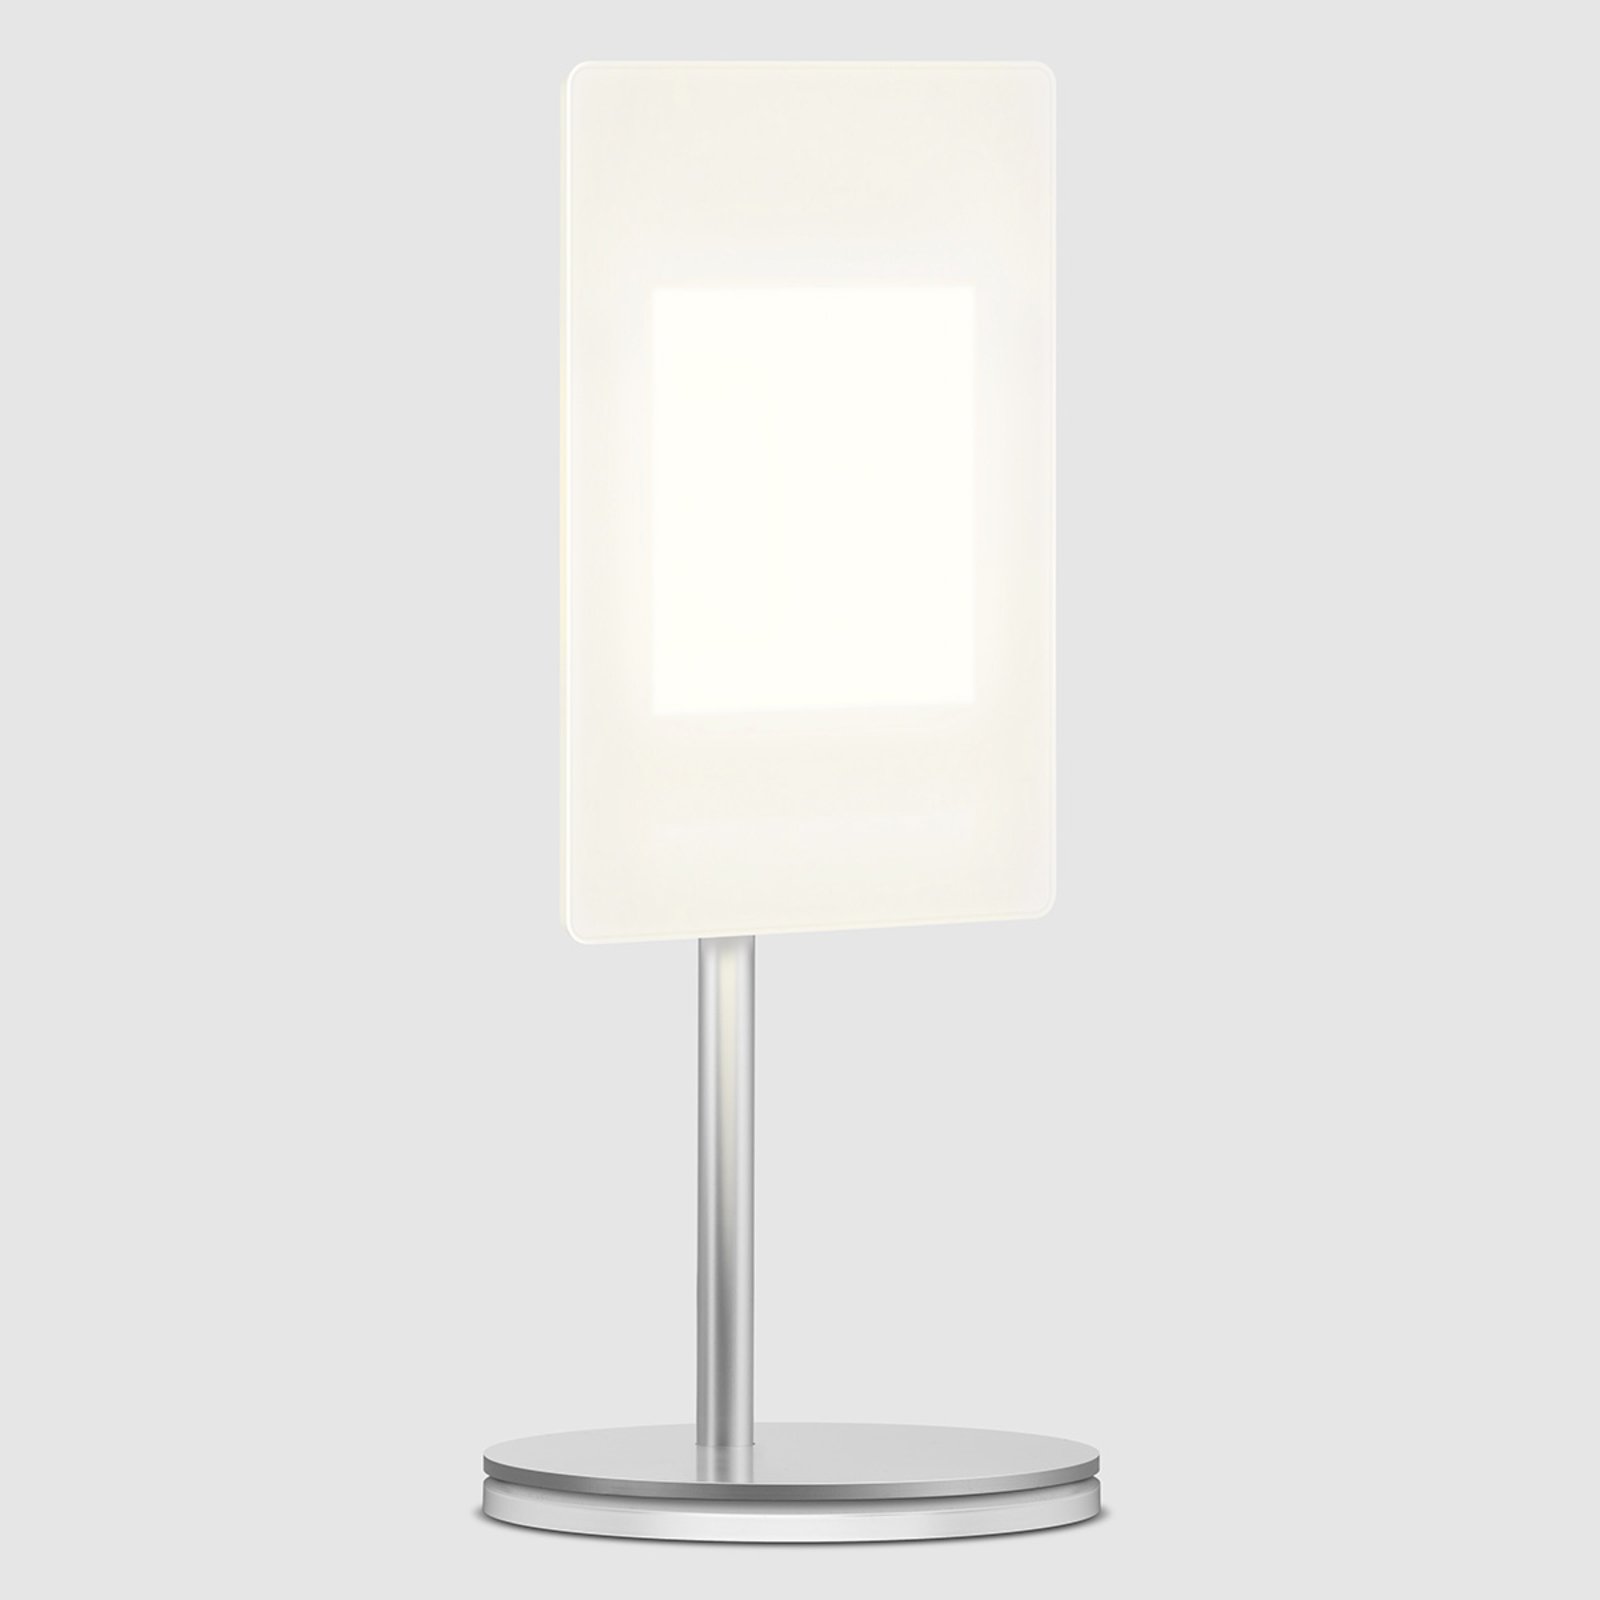 Lampe à poser OLED OMLED One t1 avec OLED, blanc